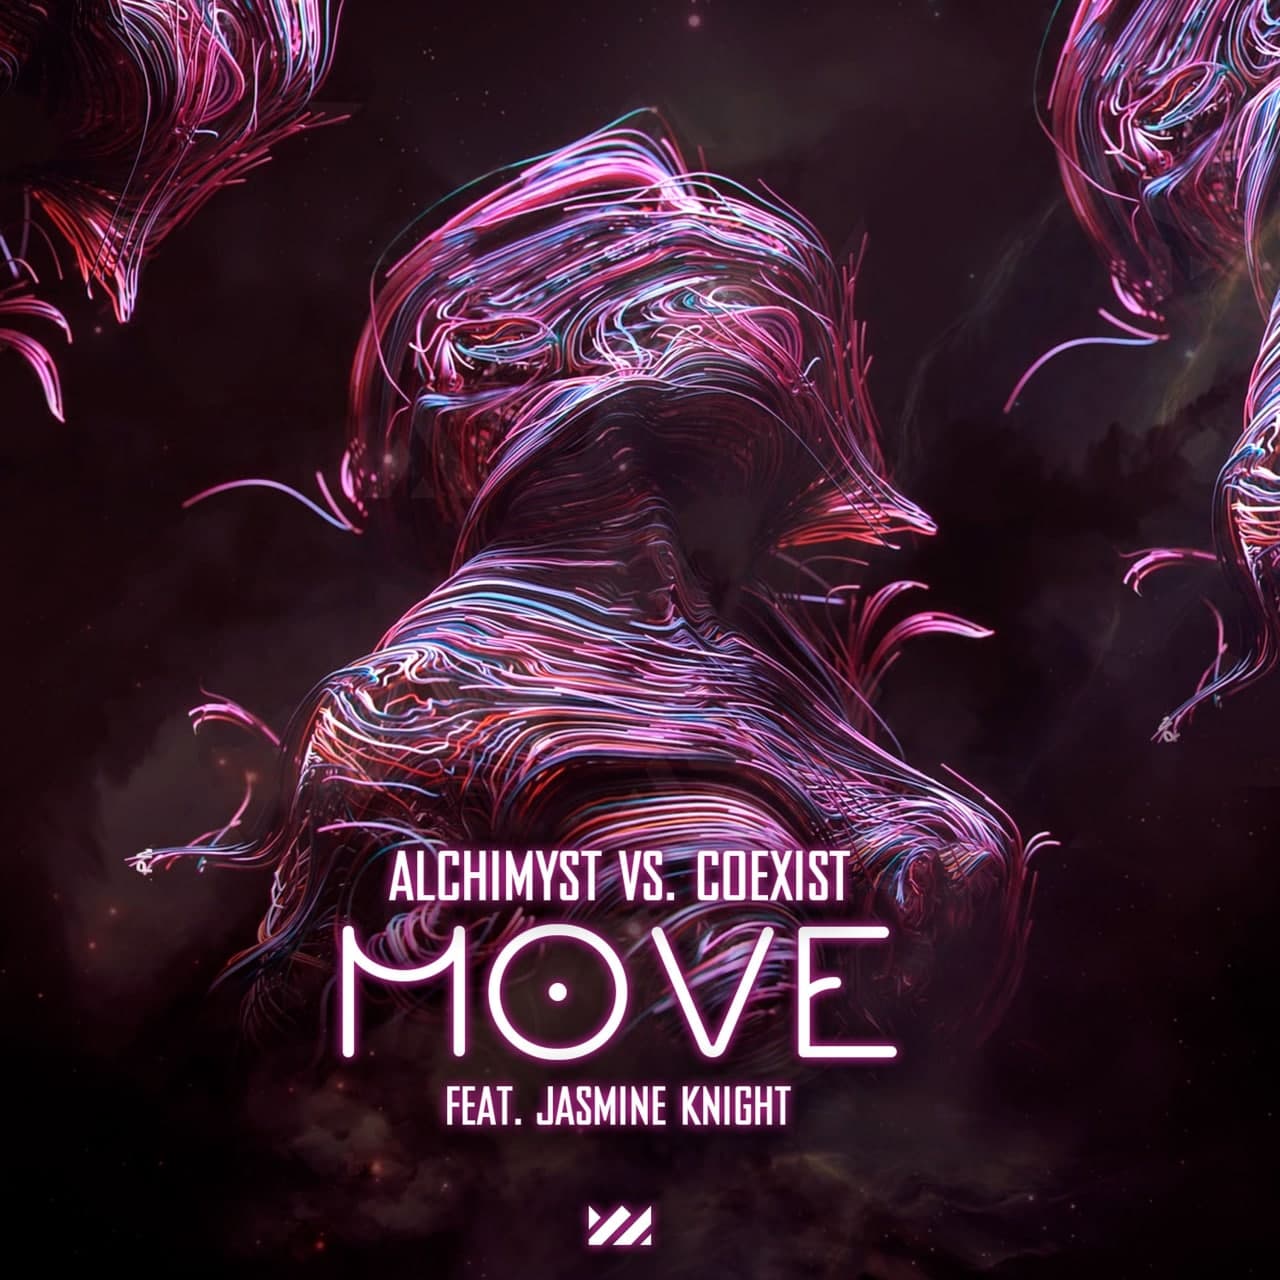 Alchimyst vs. Coexist feat. Jasmine Knight - Move (Extended Mix)